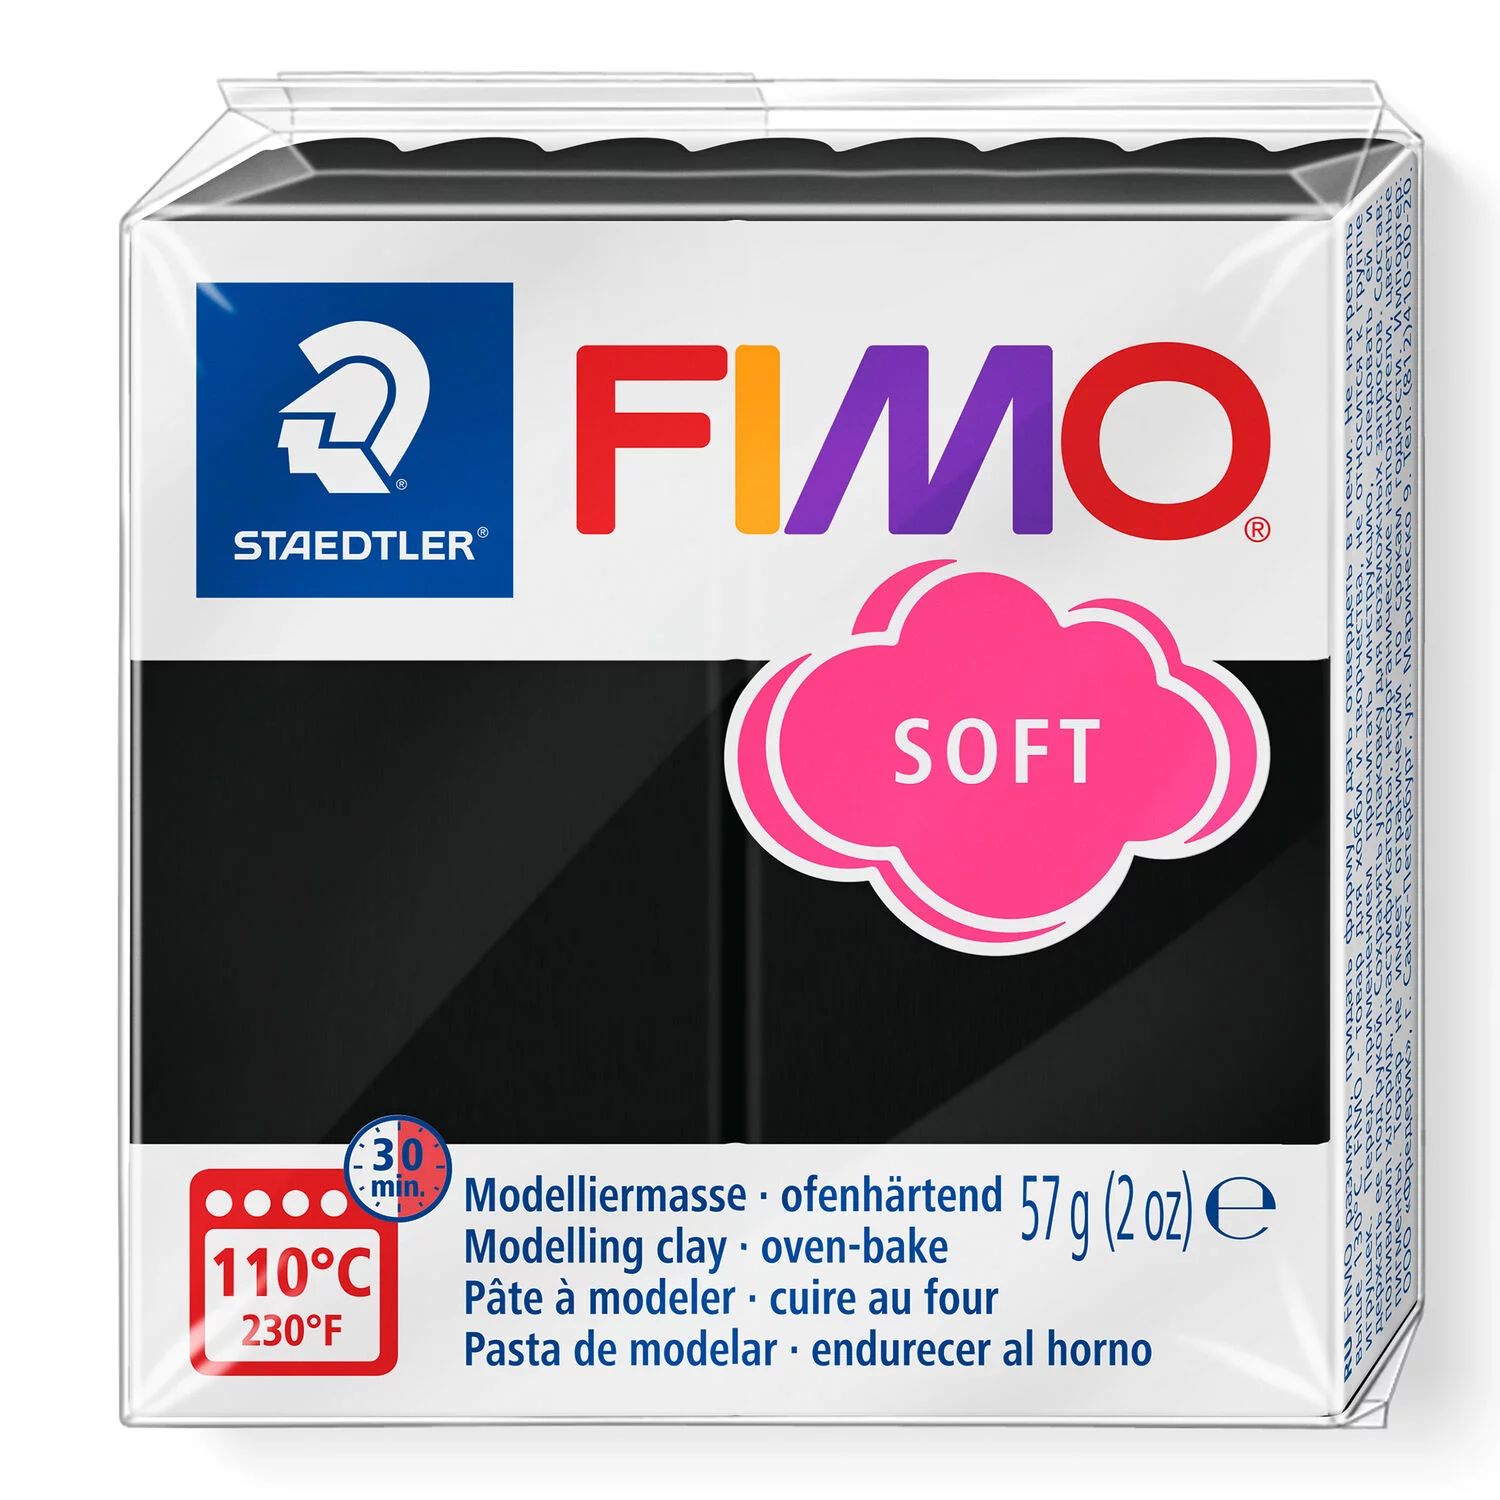 FIMO soft 57g effect neon leder Block Modelliermasse Knete wählbar 3,12€/100g 